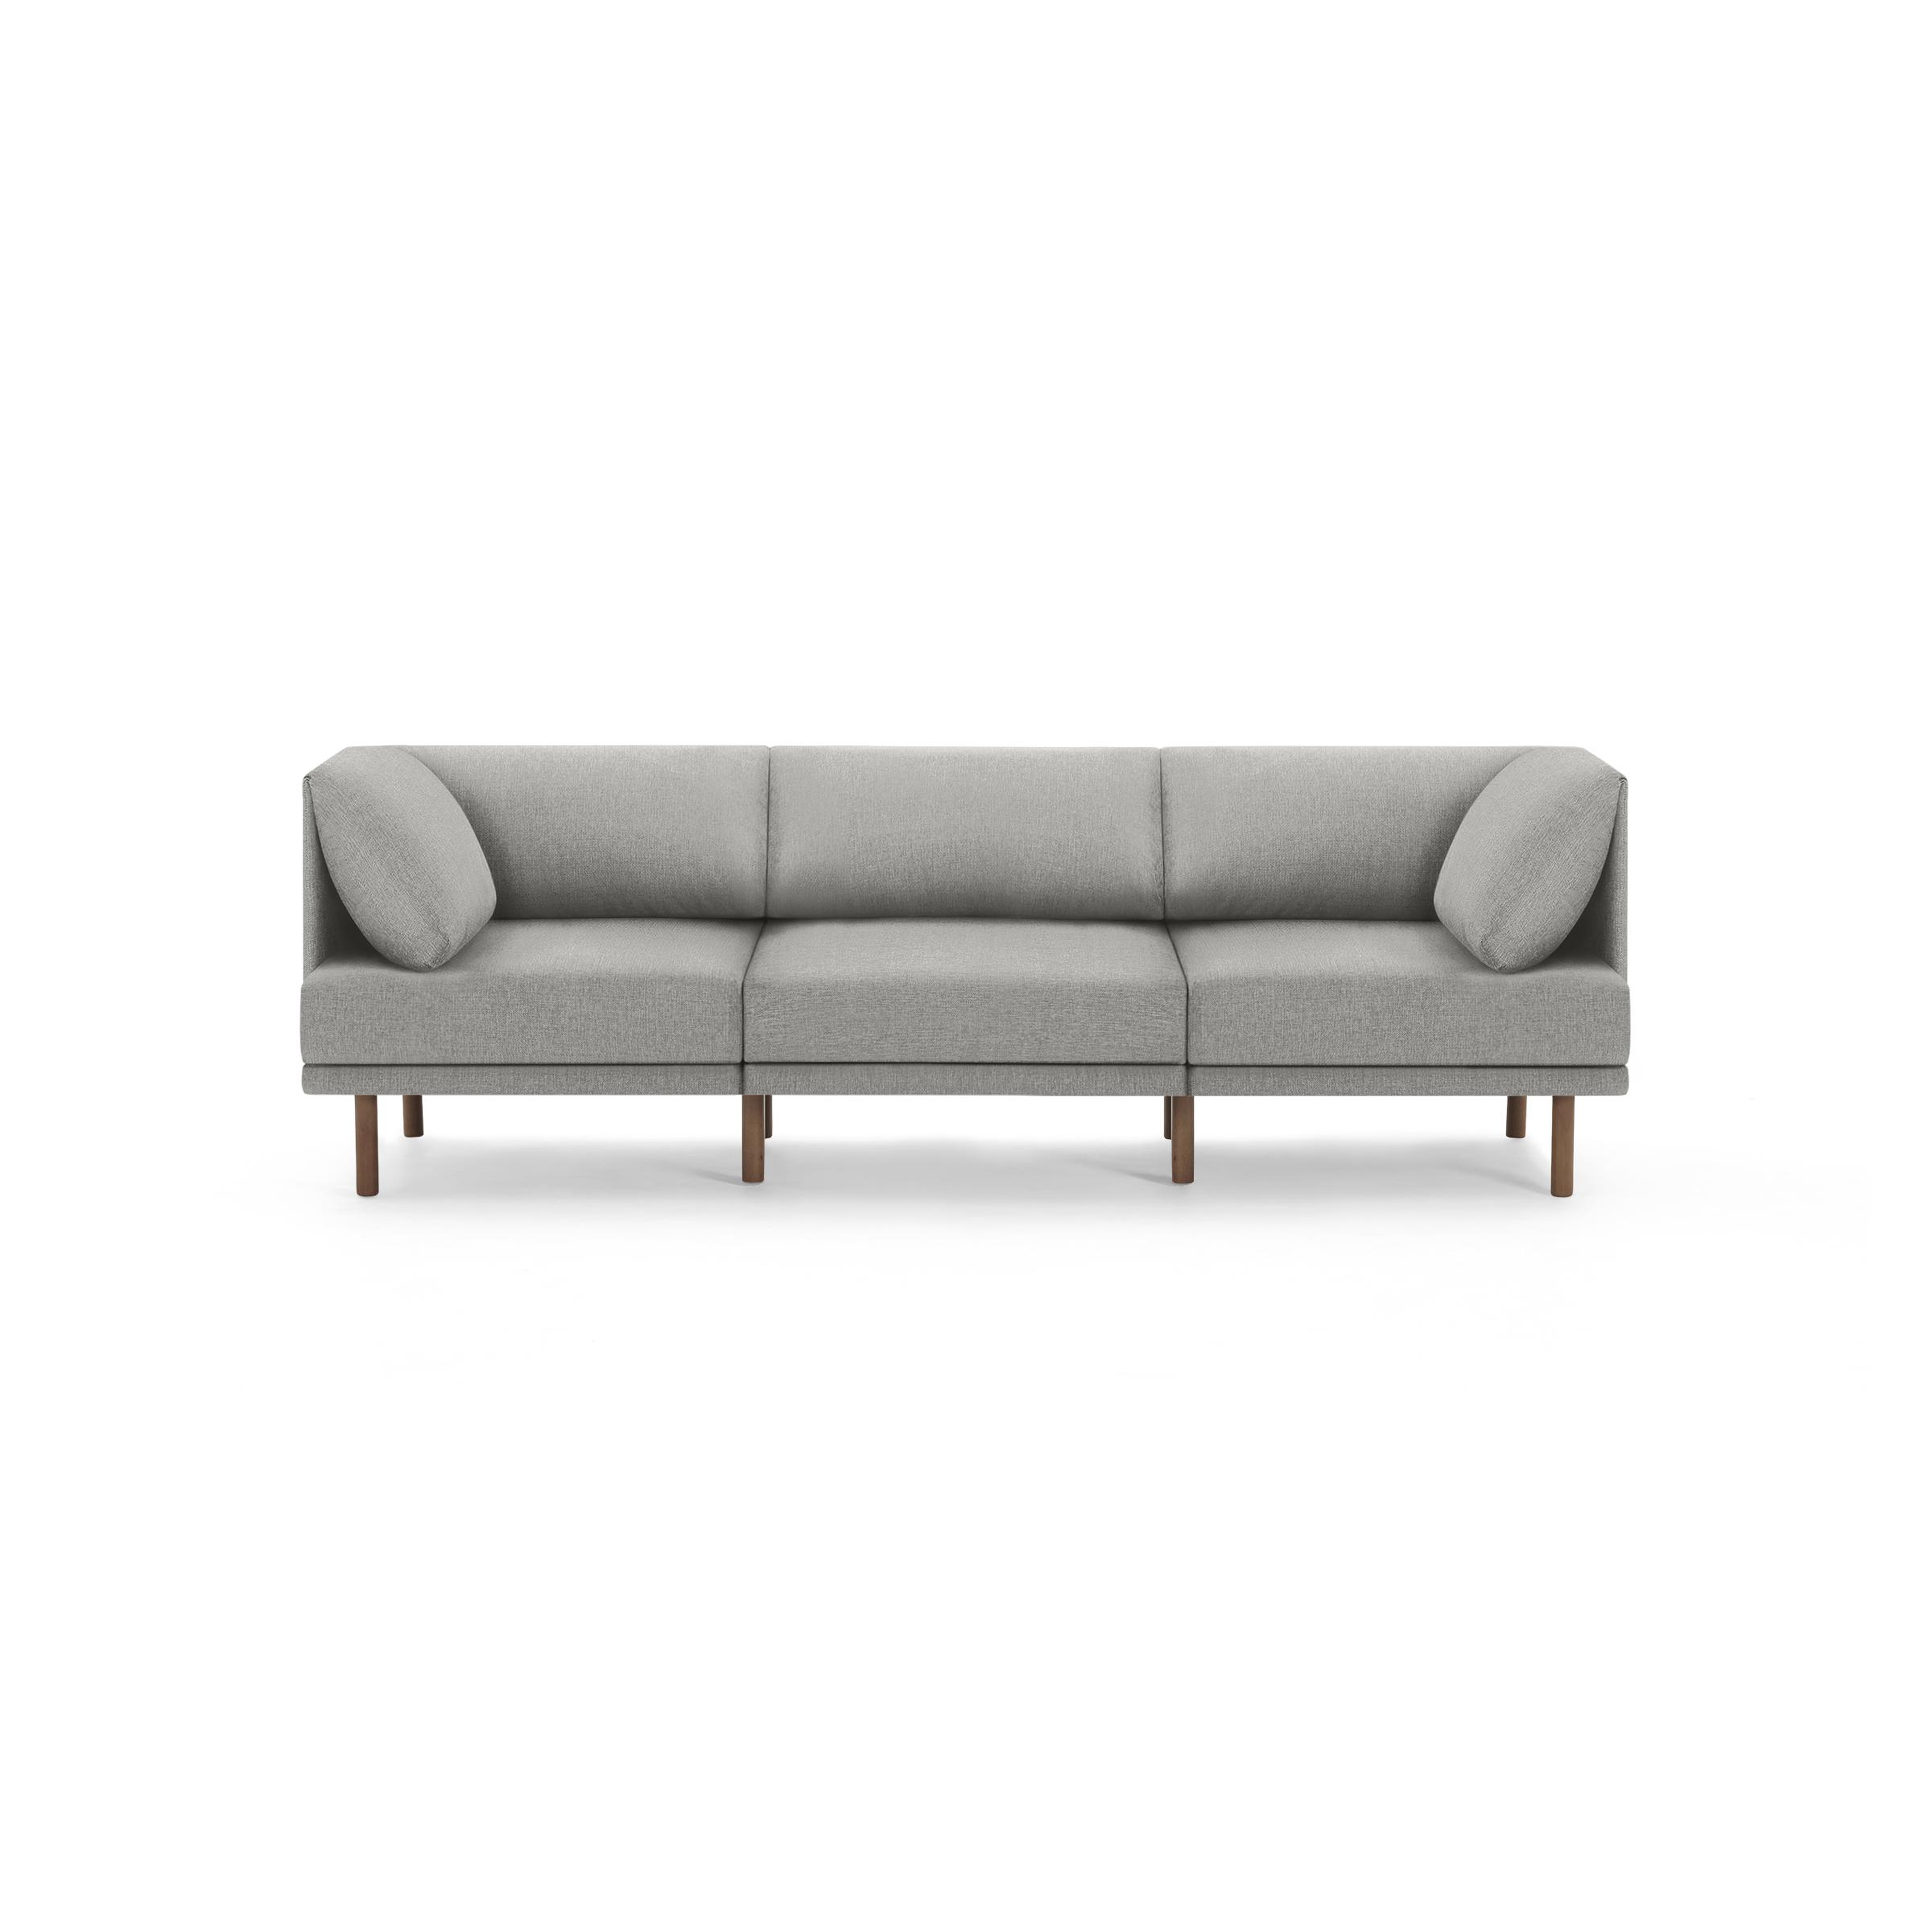 The Range 3-Piece Sofa in Stone Gray, Walnut Legs - Burrow